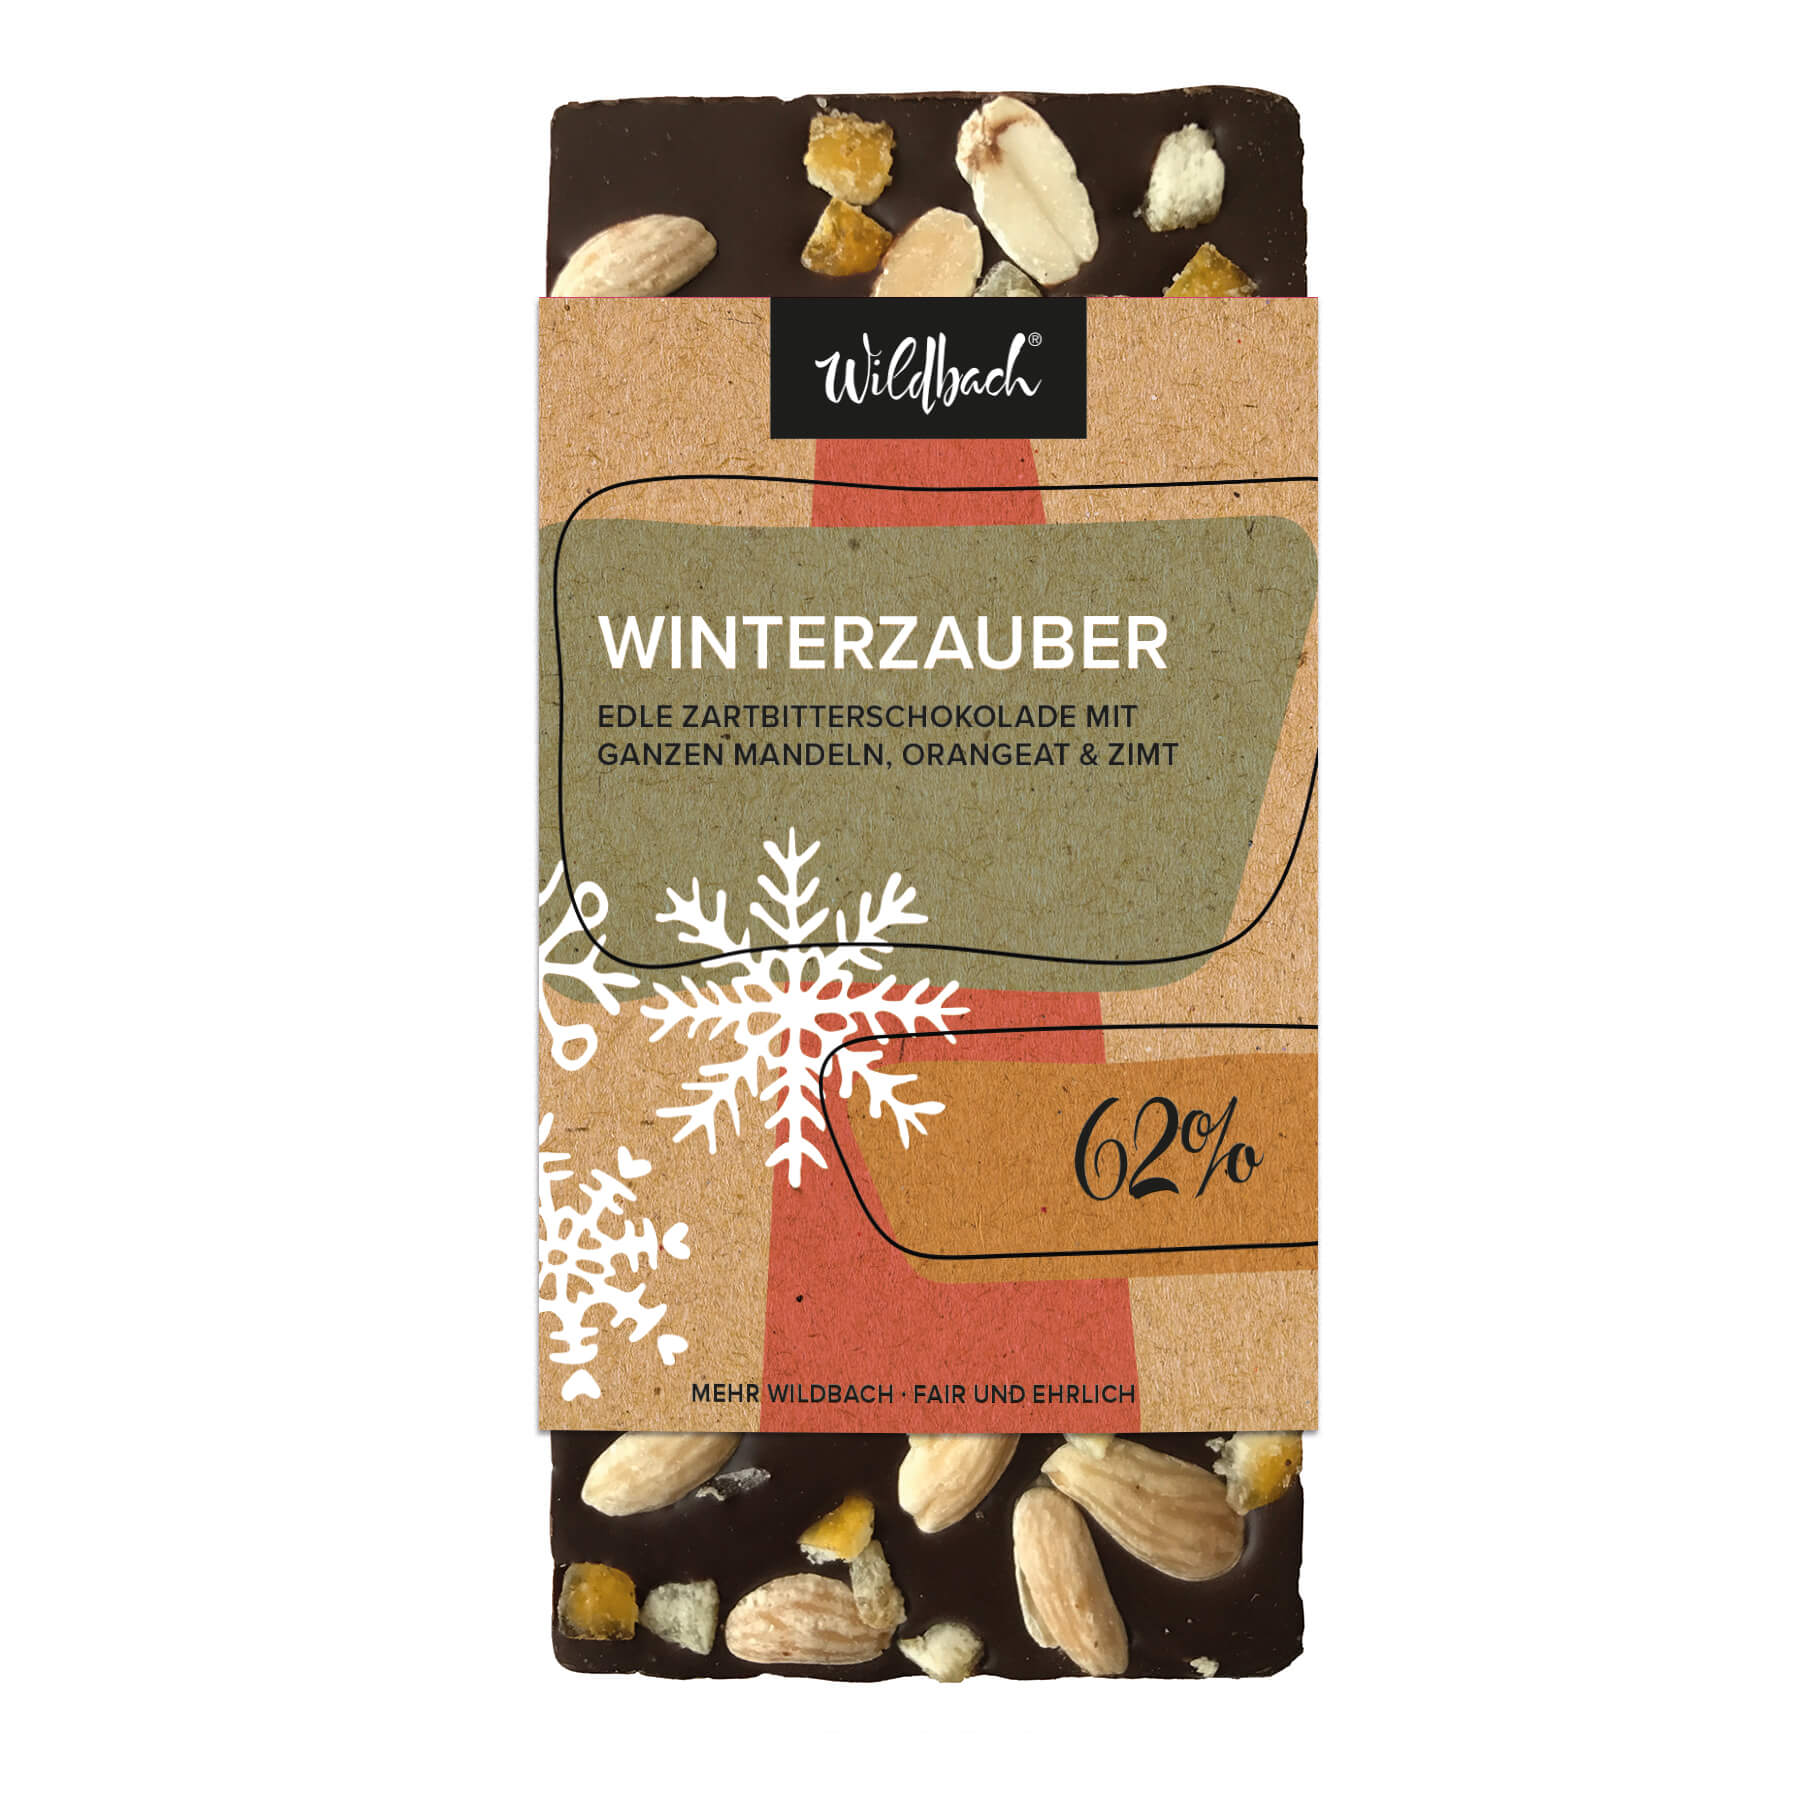 90g Tafel Extra viel Wildbach - Winterzauber